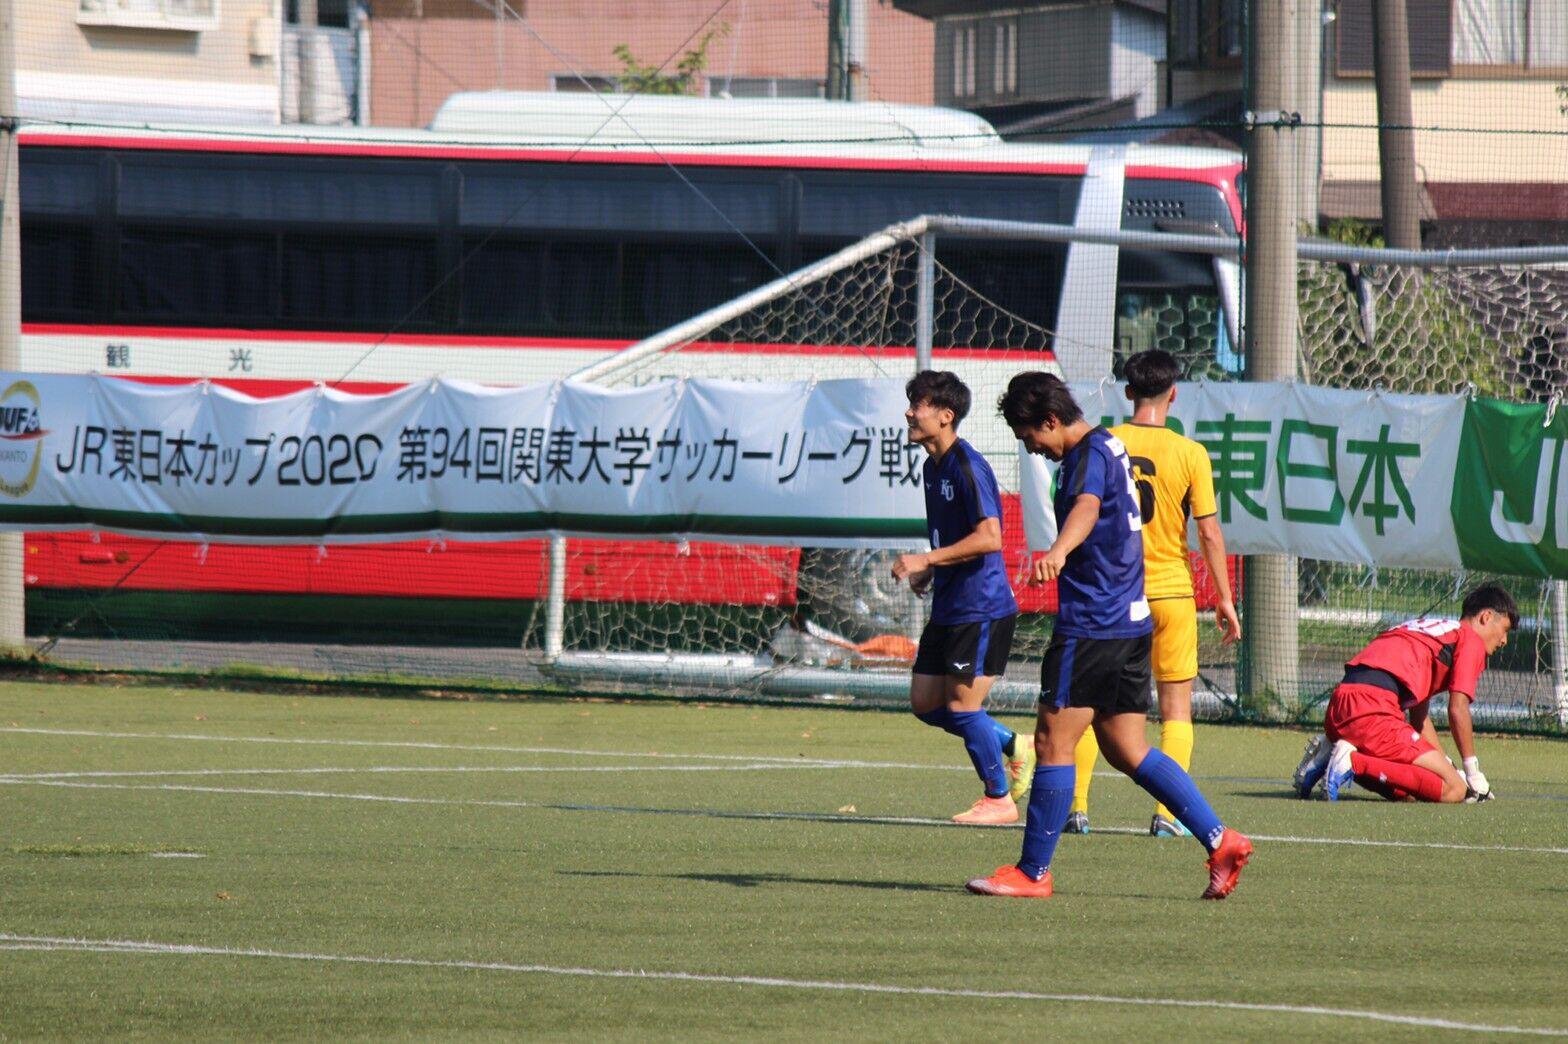 https://football.ku-sports.jp/blog/photoreport/images/20200831200938.jpg